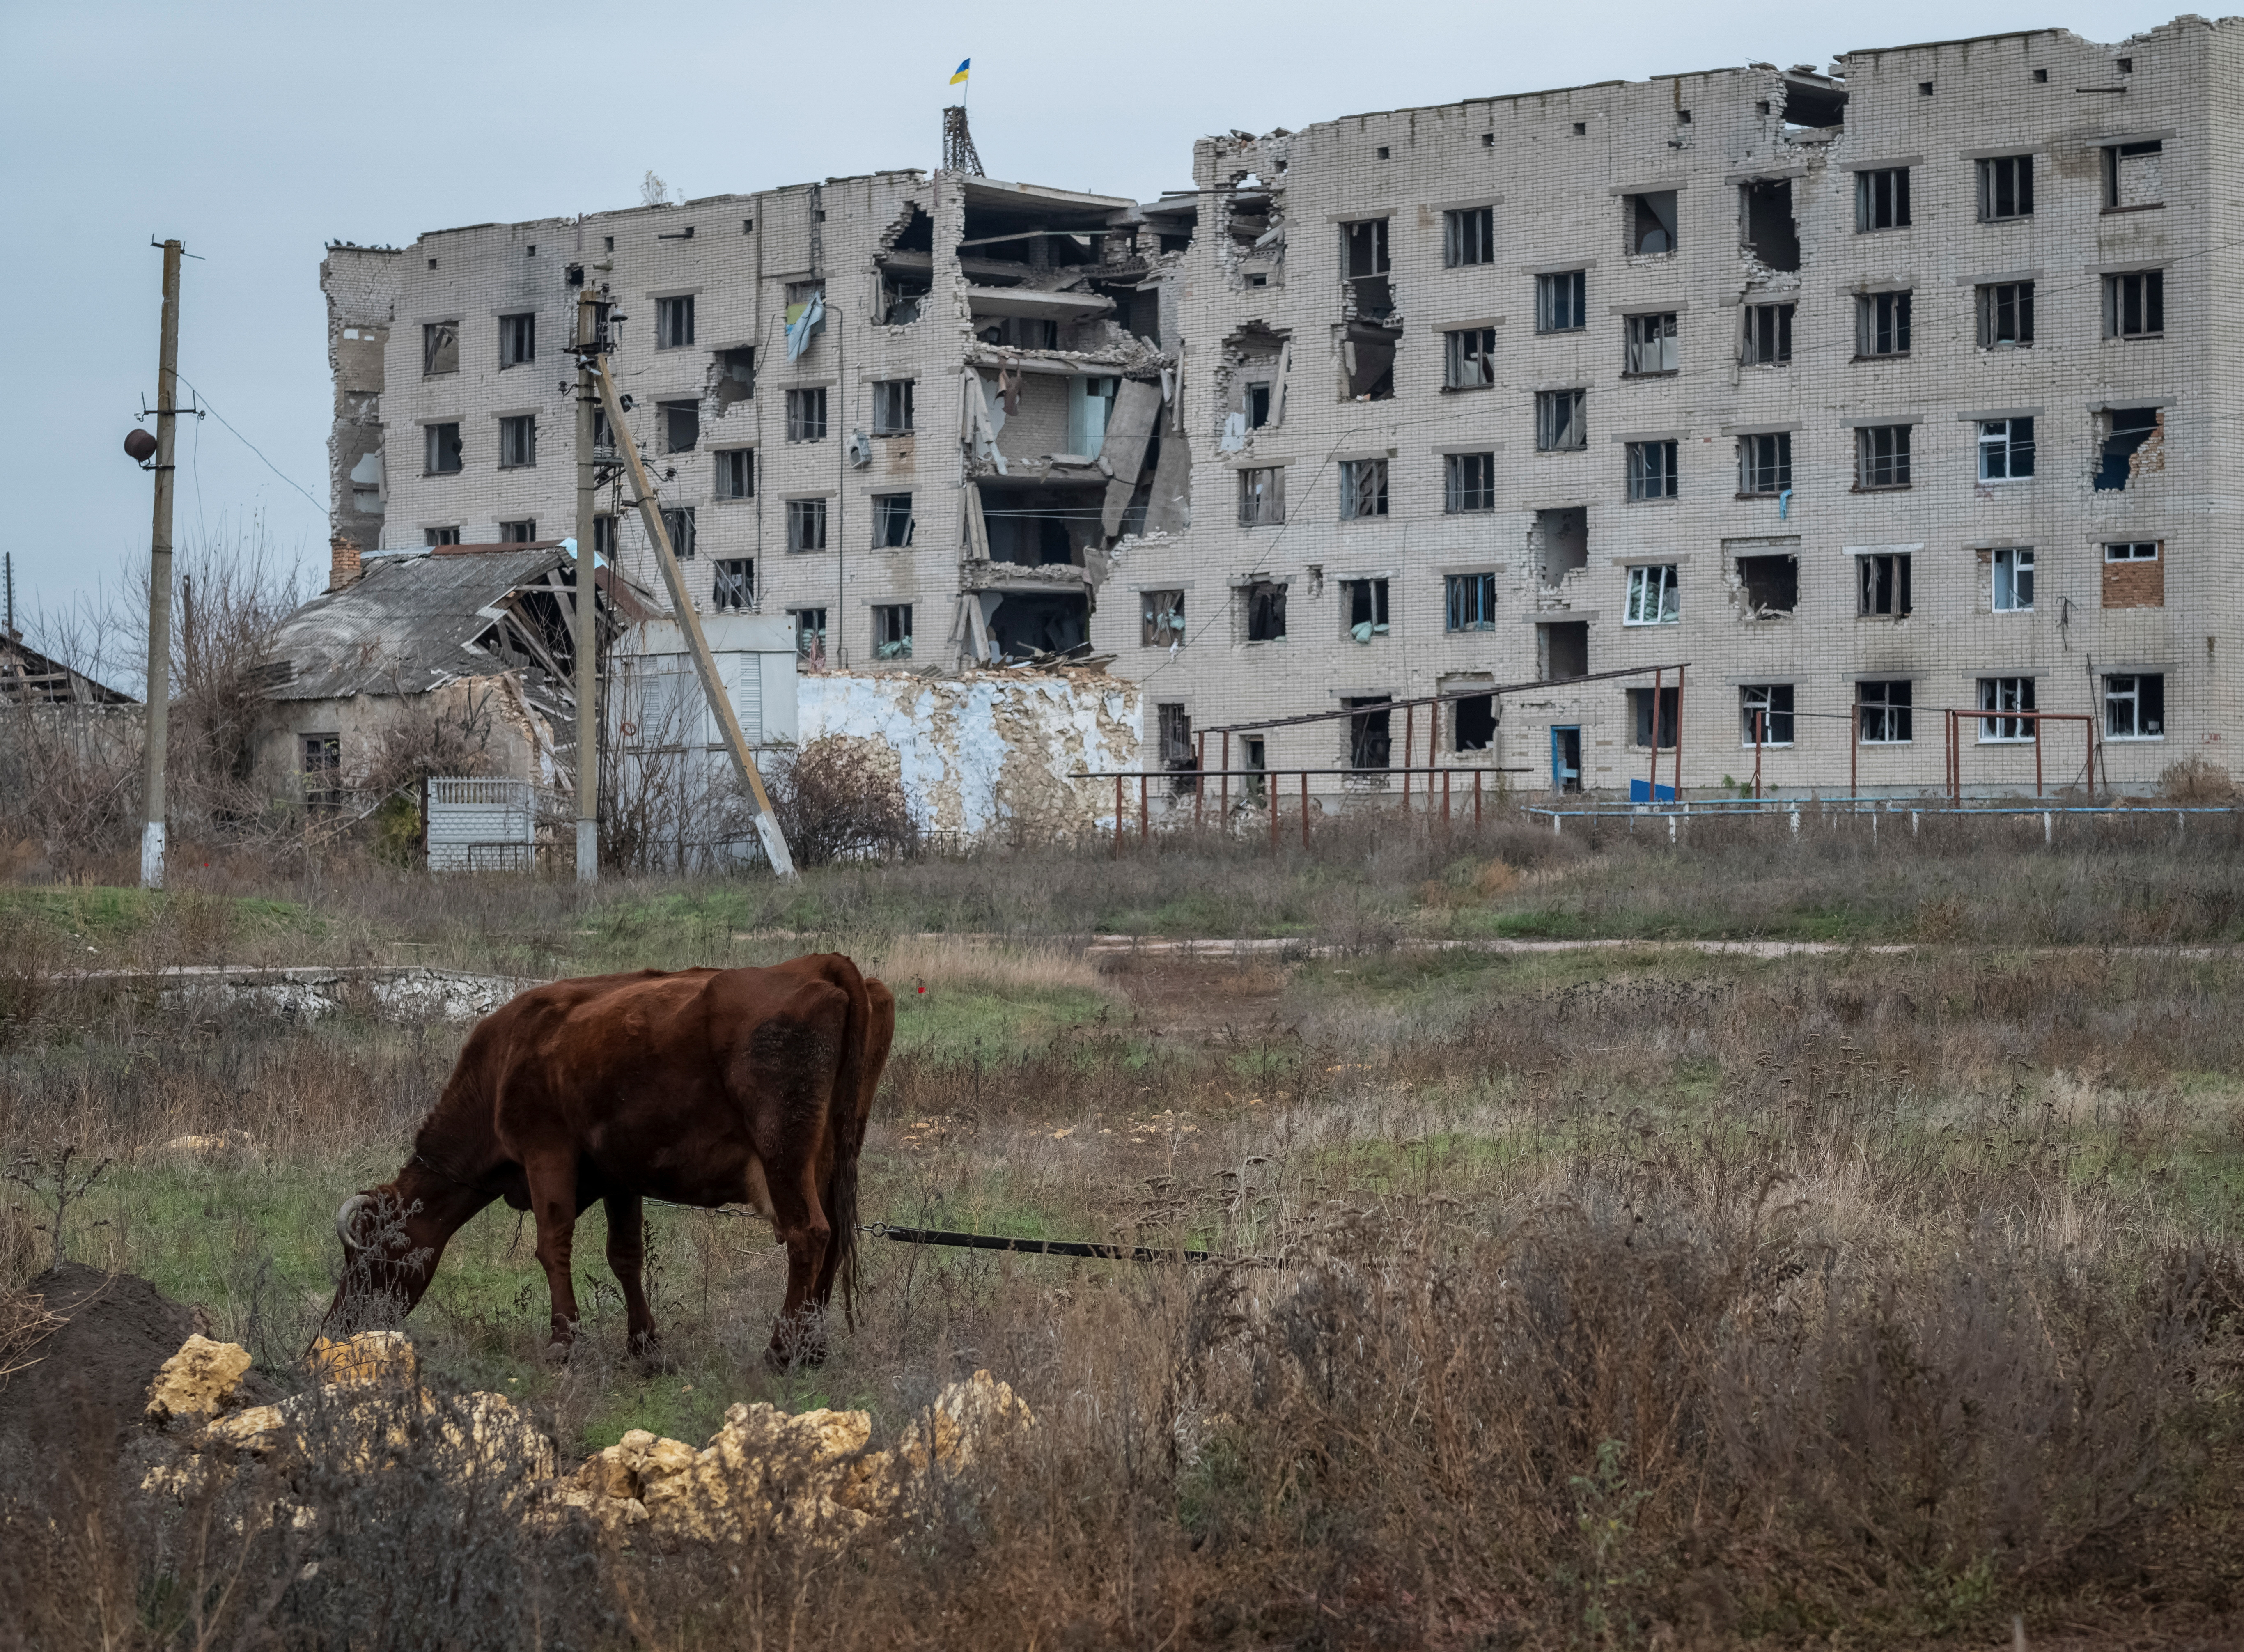 A cow grazes near a damaged house in the village of Arkhanhelske, Kherson region